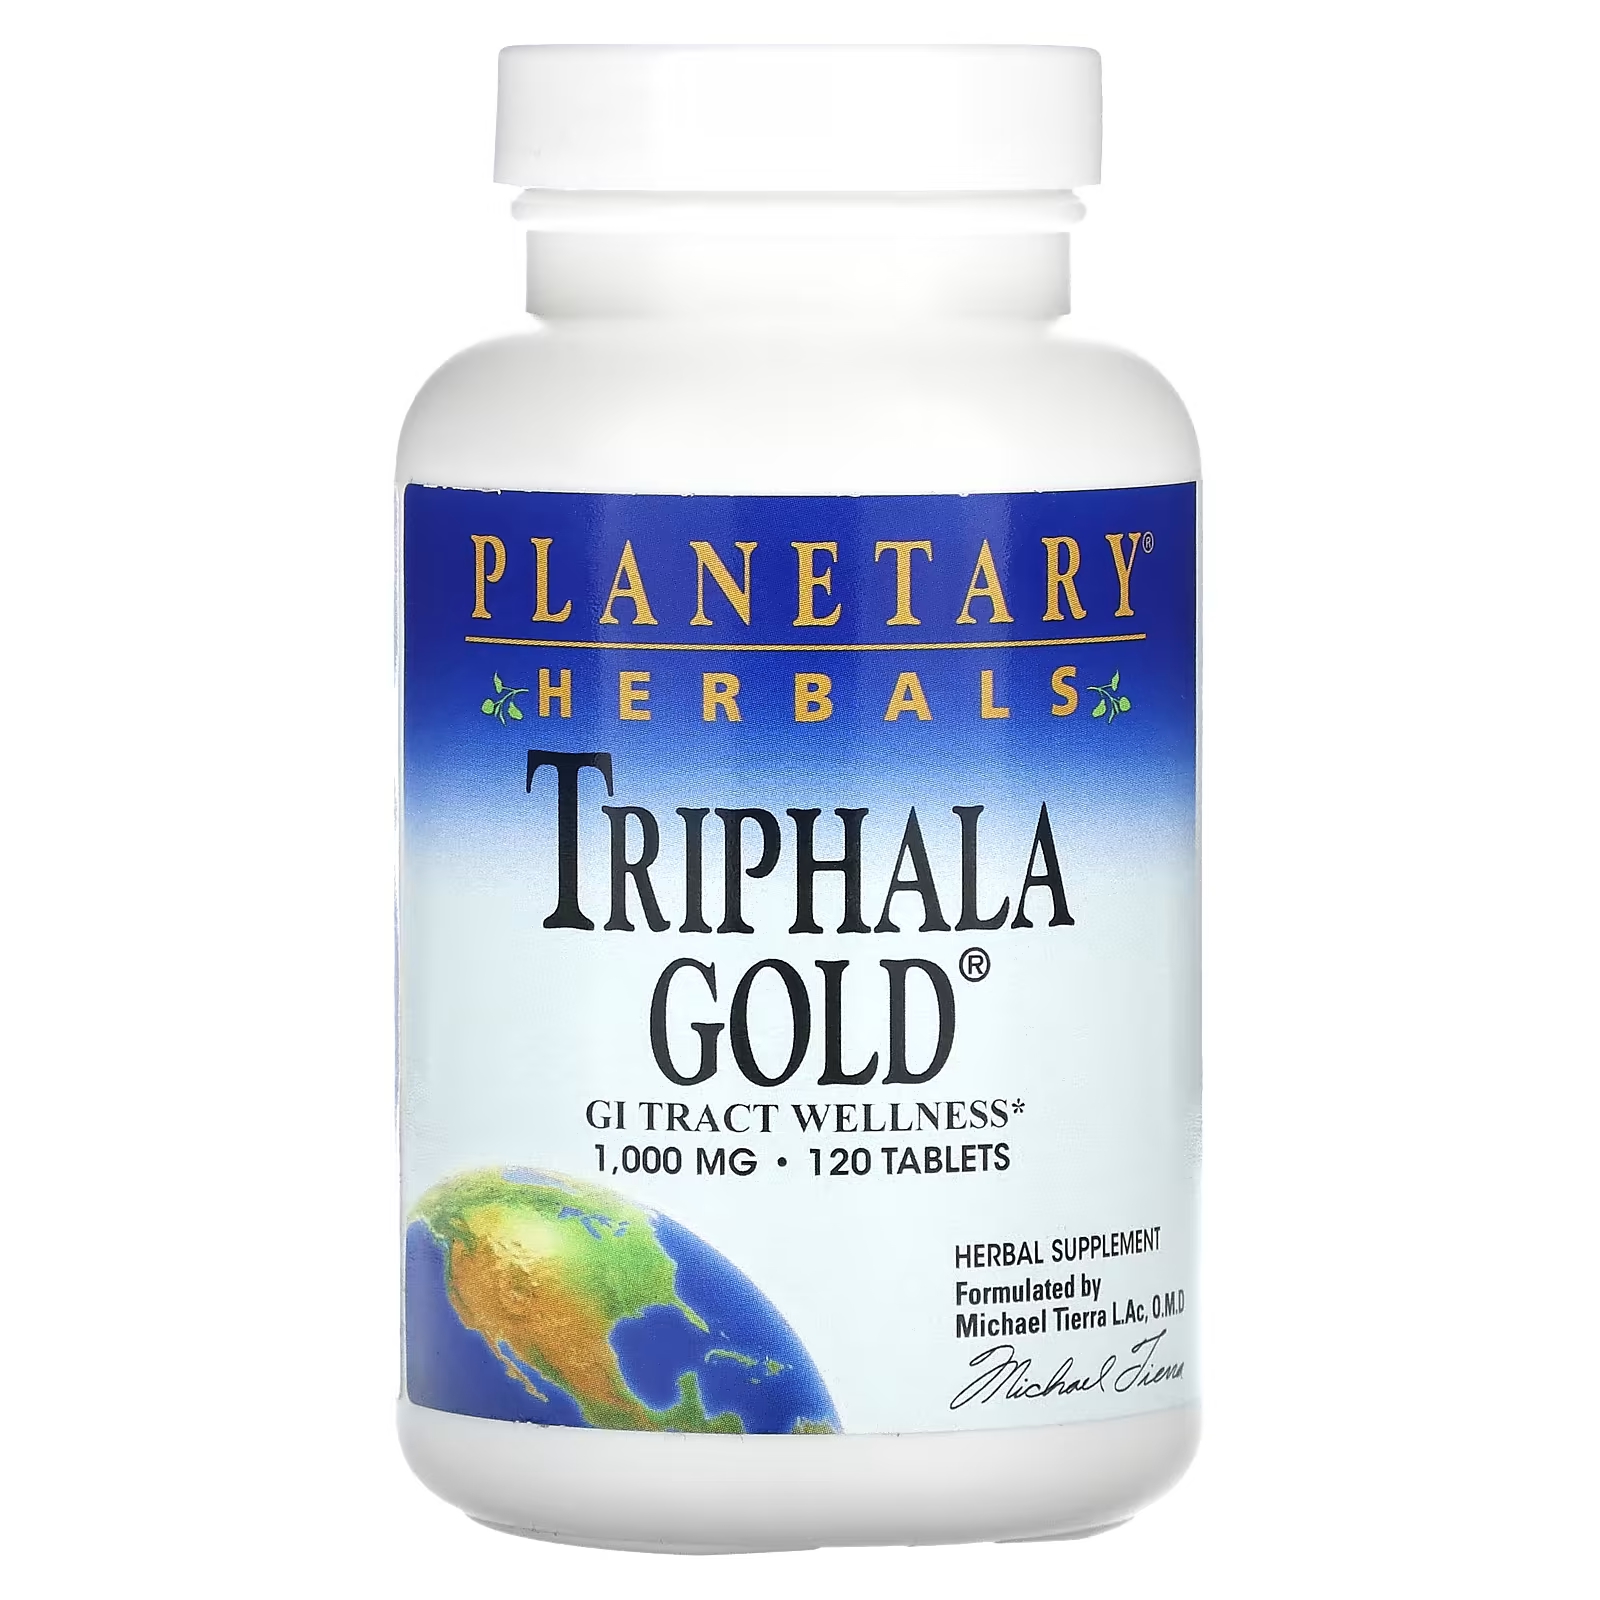 Planetary Herbals Трифала Голд 1000 мг 120 таблеток planetary herbals трифала голд 1000 мг 120 таблеток